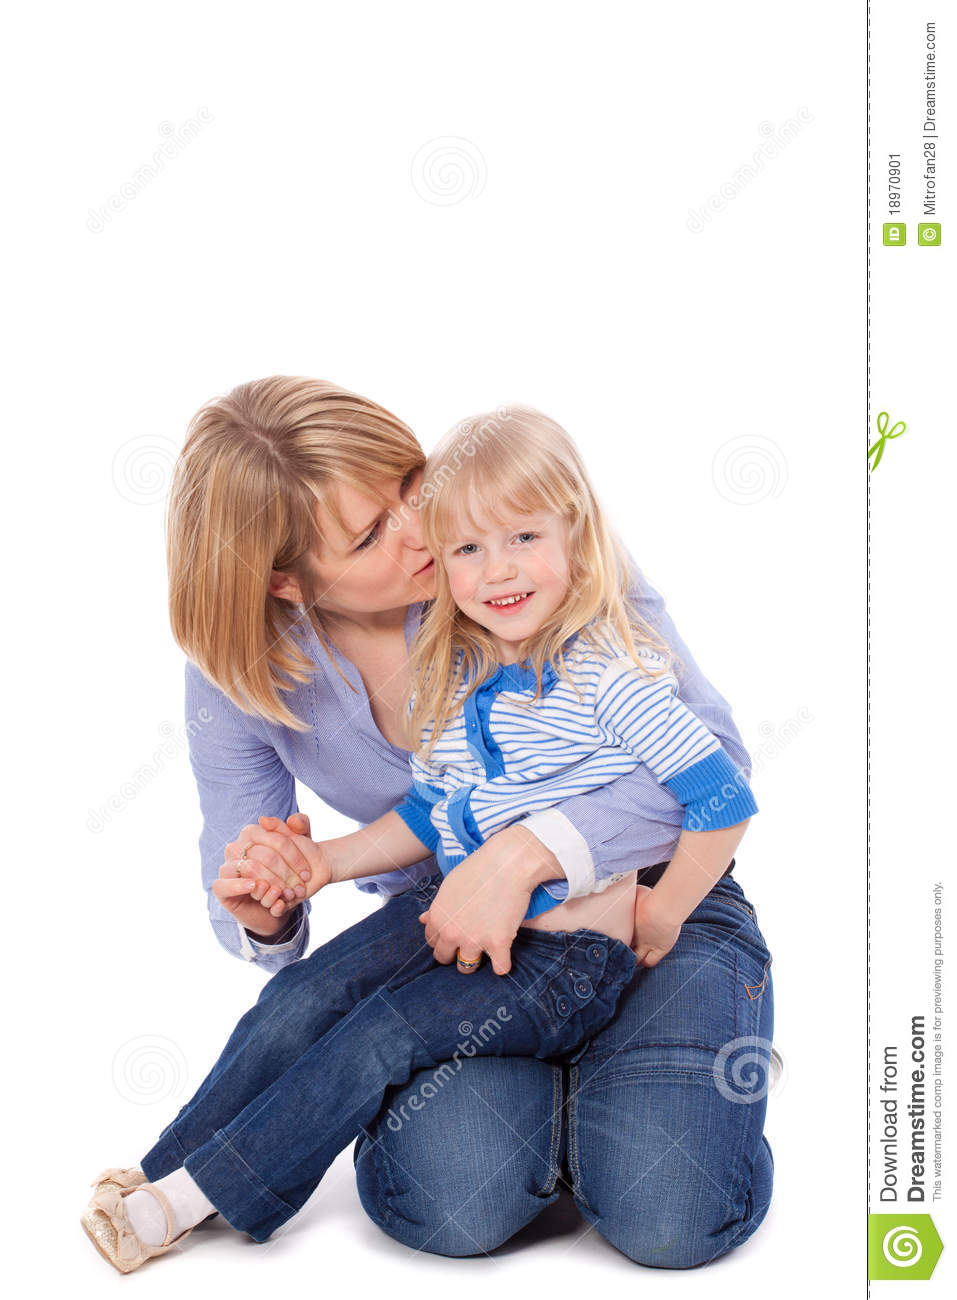 Mom Whisper In Child S Ear Stock Image   Image  18970901